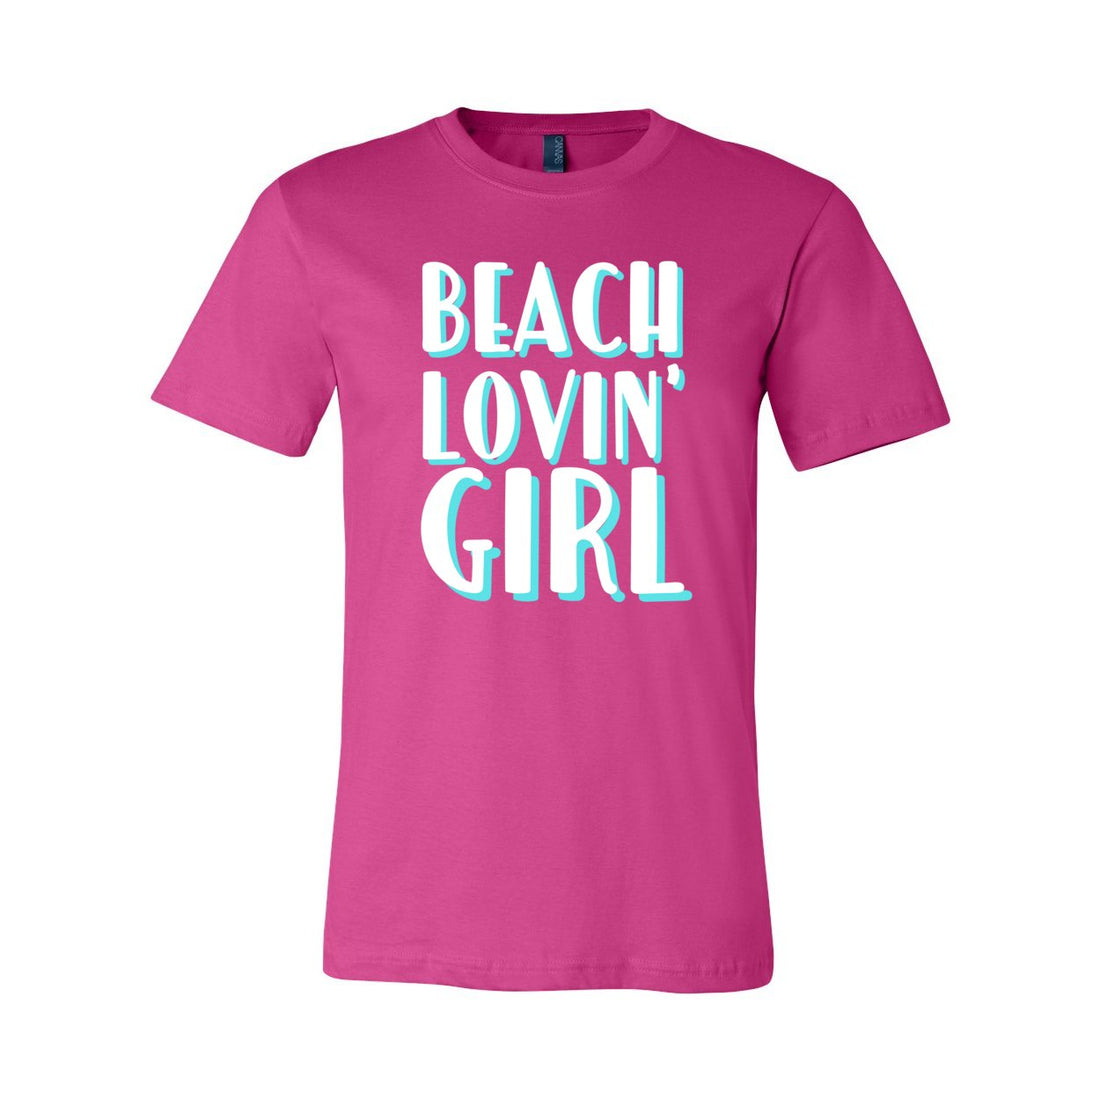 Beach Lovin' Girl Jersey Tee - T-Shirts - Positively Sassy - Beach Lovin' Girl Jersey Tee